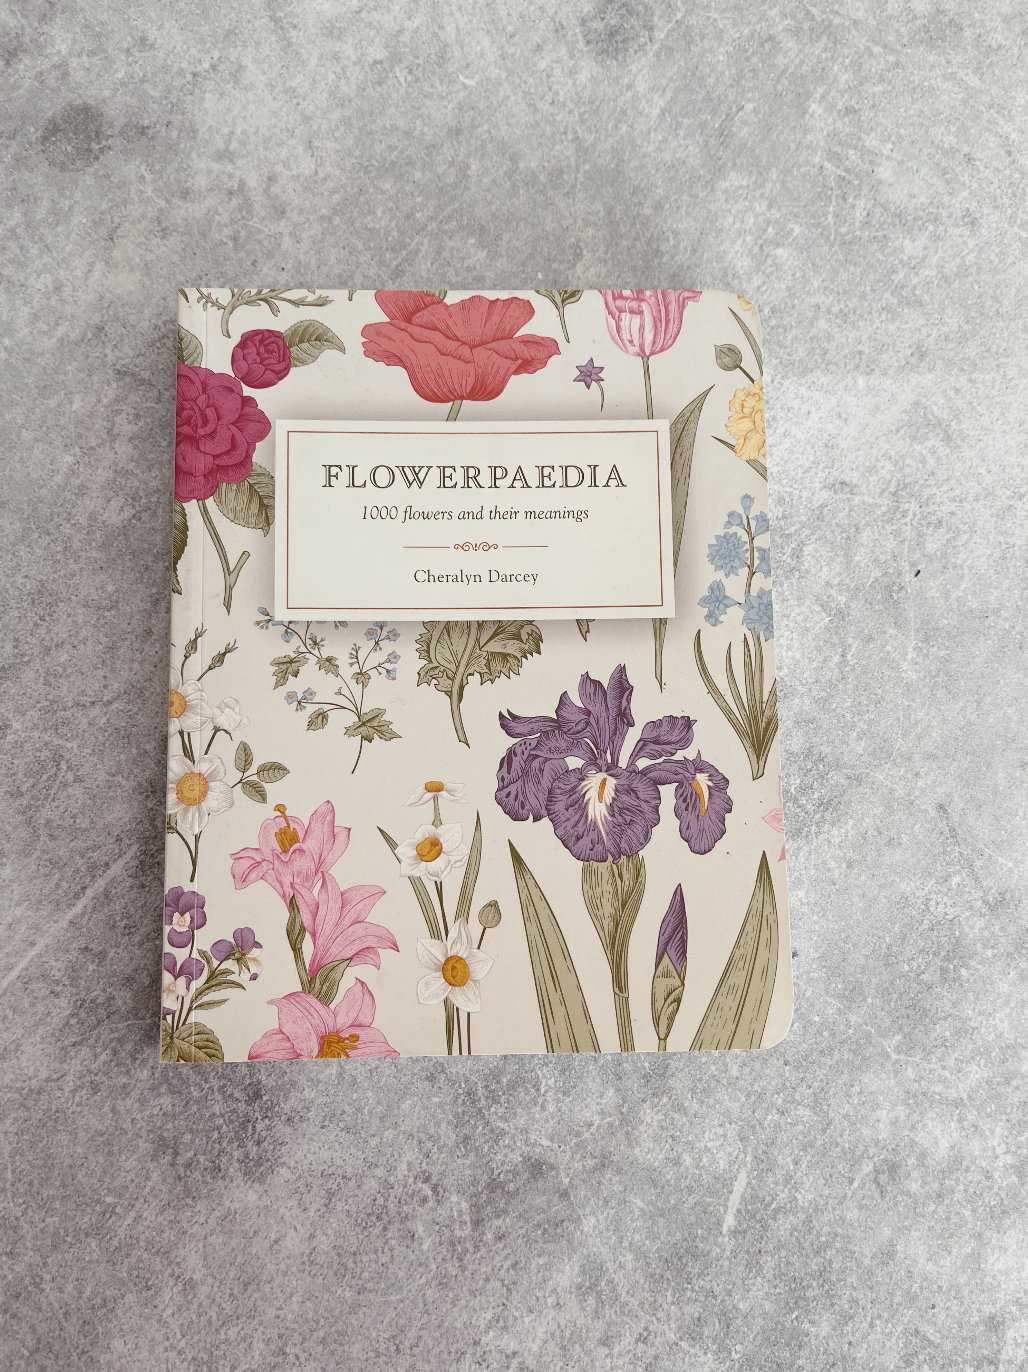 Flowerpaedia: 1000 flowers and their meanings Paperback – 1 April 2017